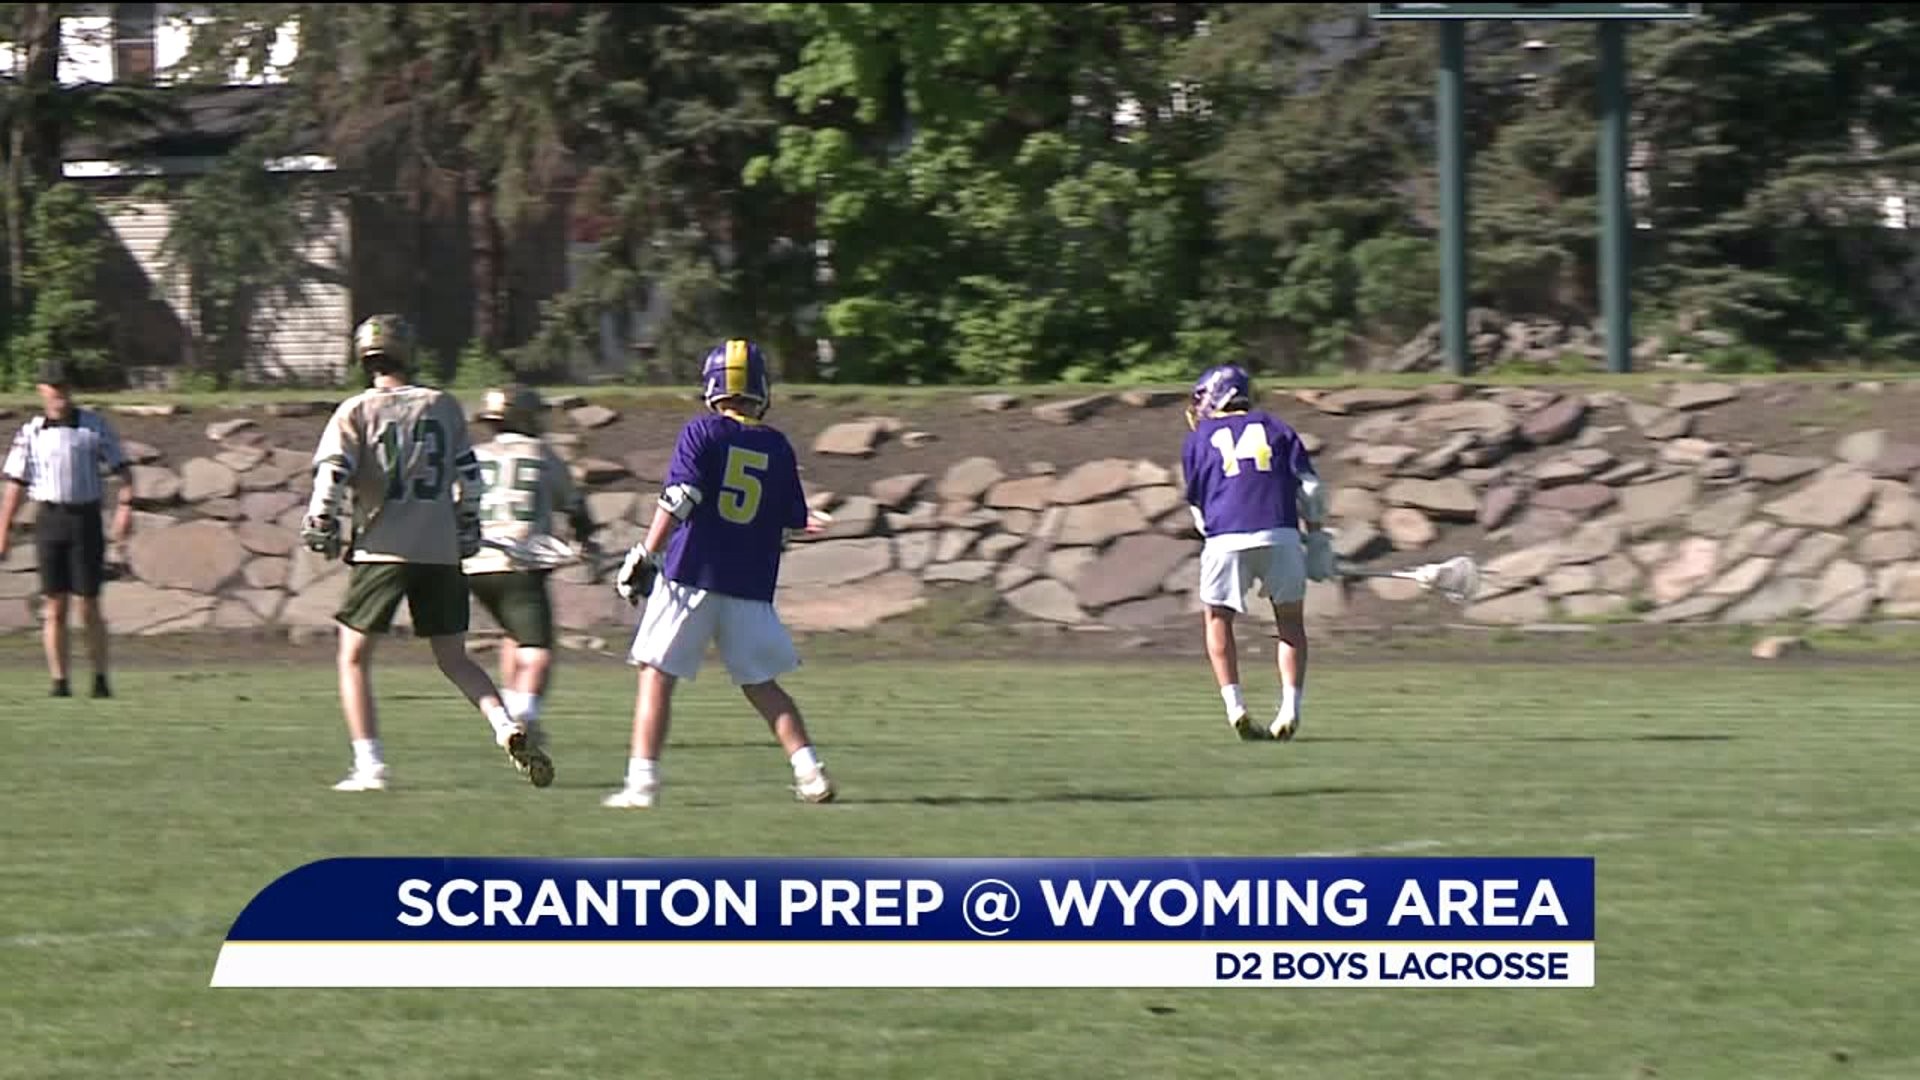 Scranton Prep vs Wyoming Area lacrosse